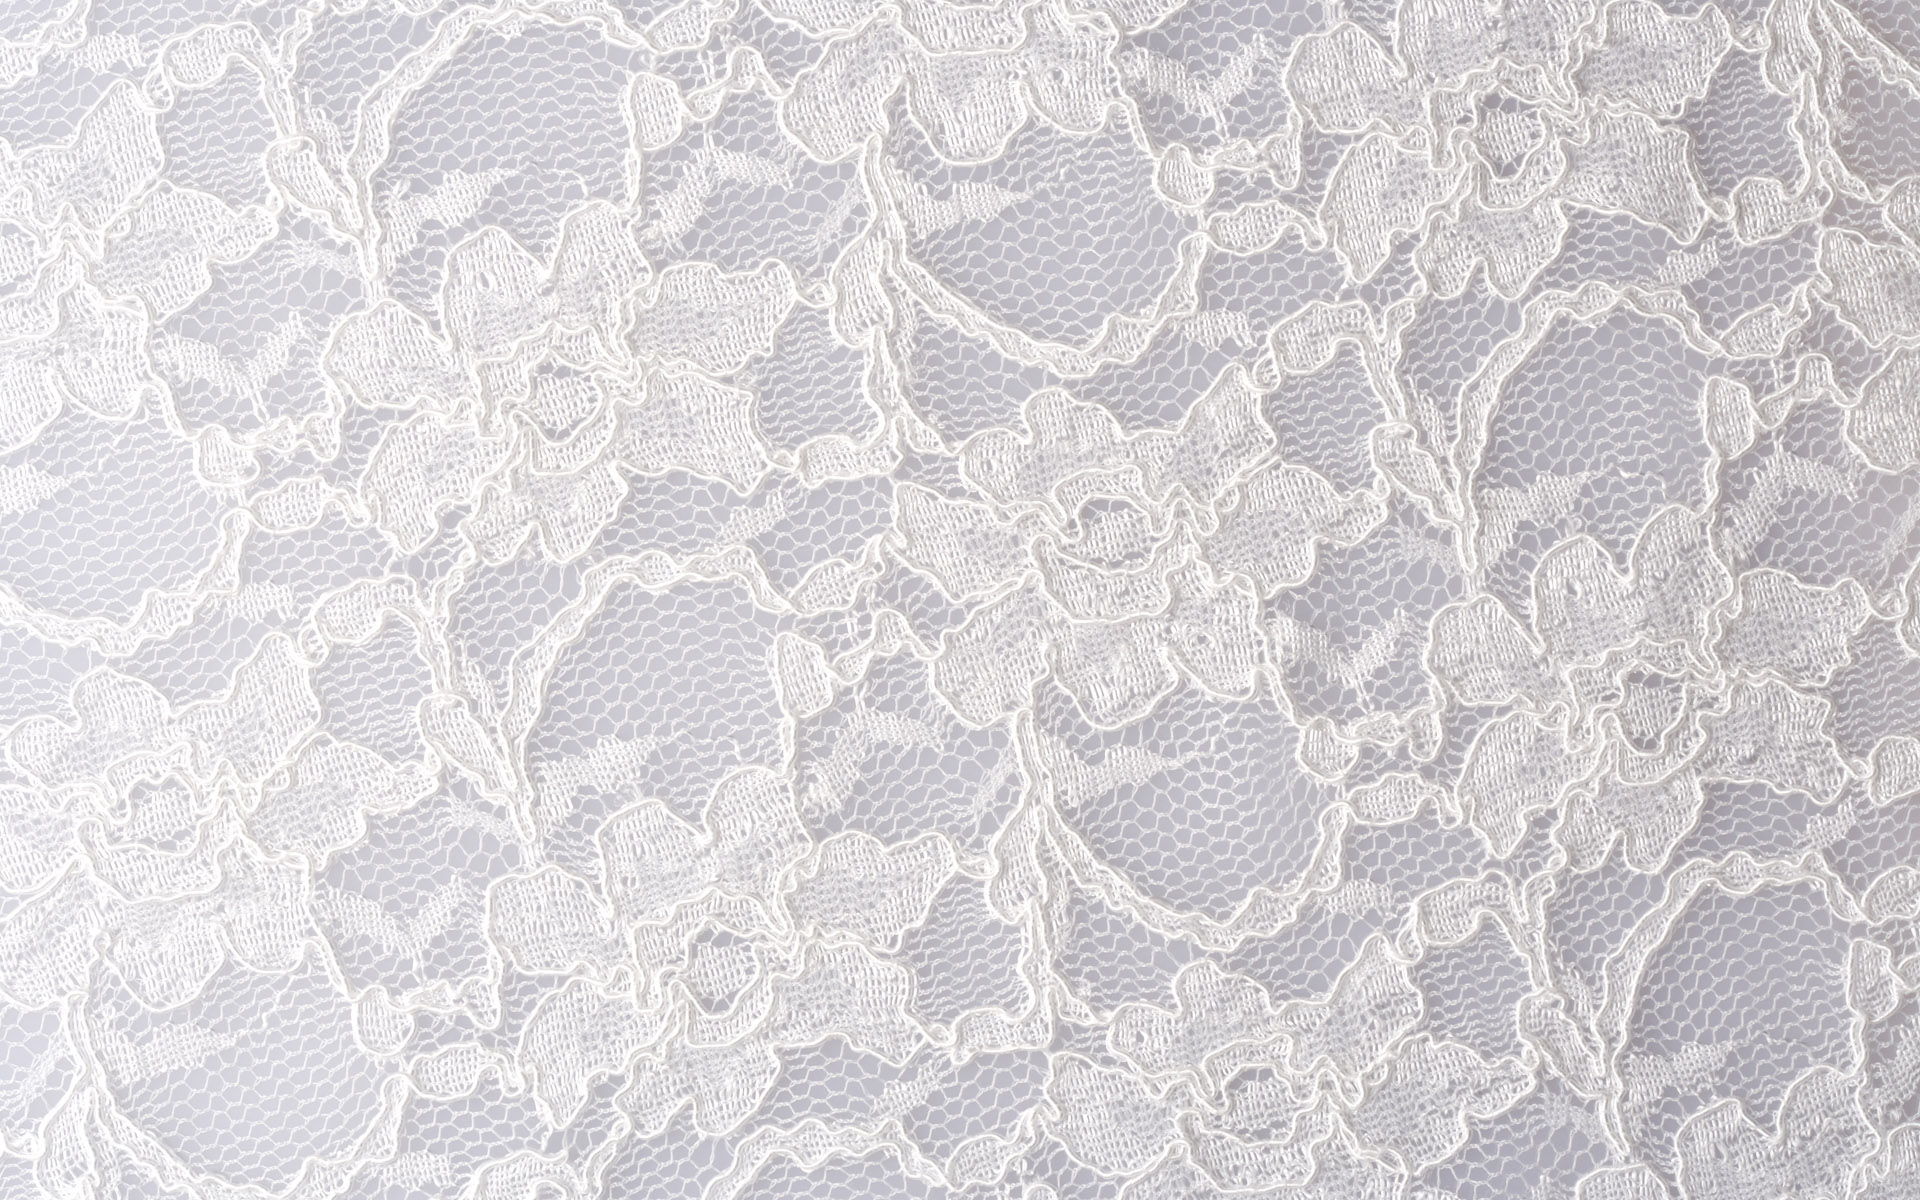 [59+] White Lace Background | WallpaperSafari.com